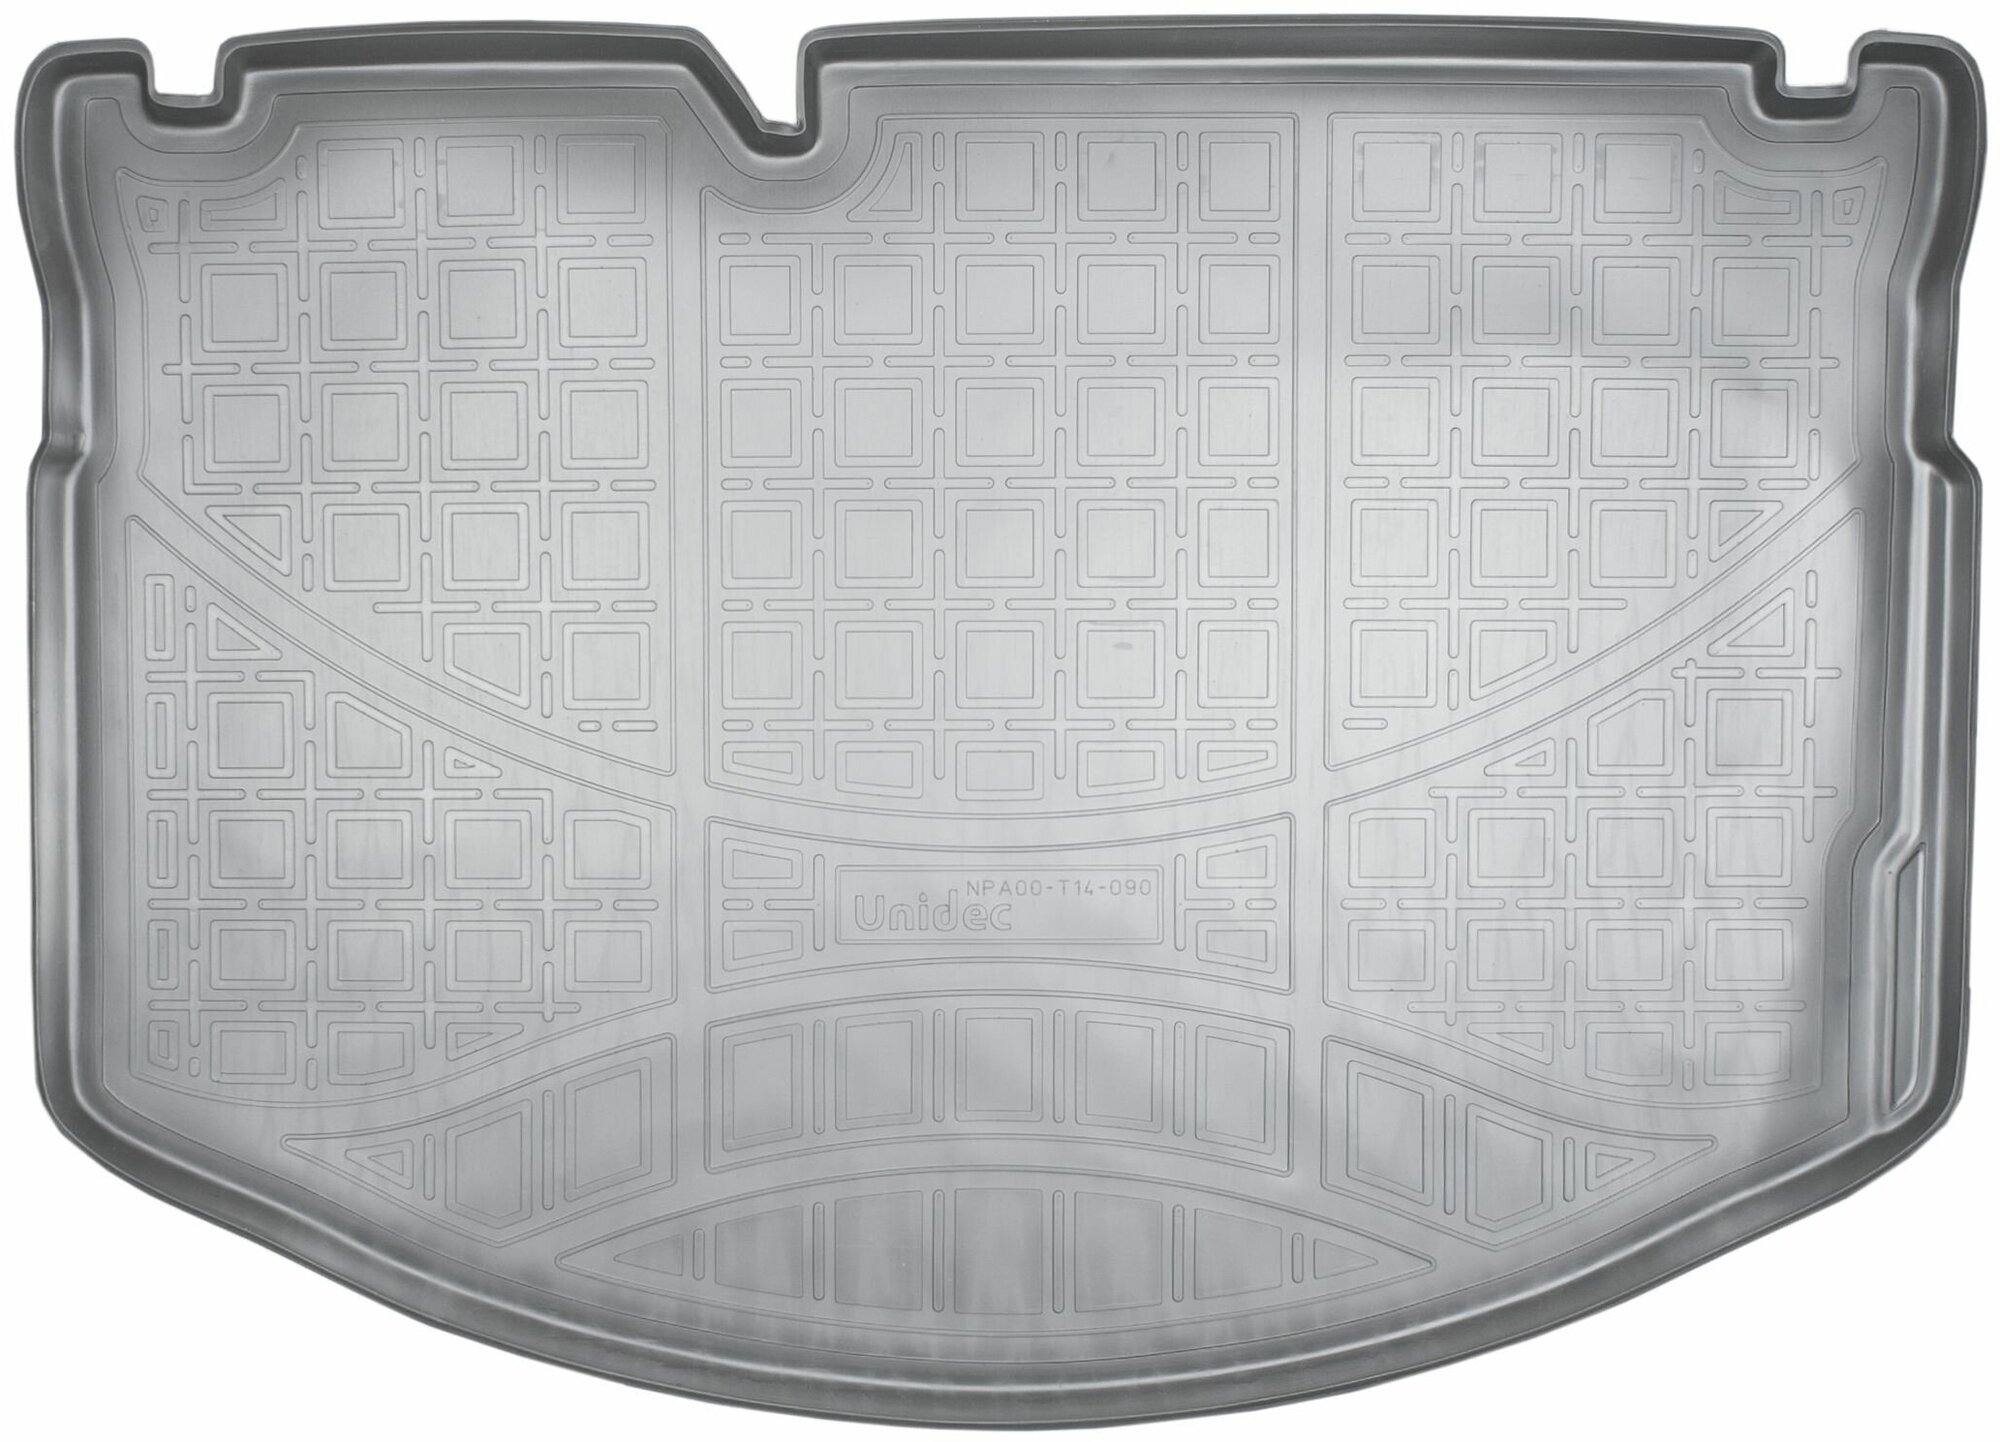 Коврик багажника (полиуретан) для Citroen C3 (S) HB-хэтчбек (2009-) (NPA00-T14-090)